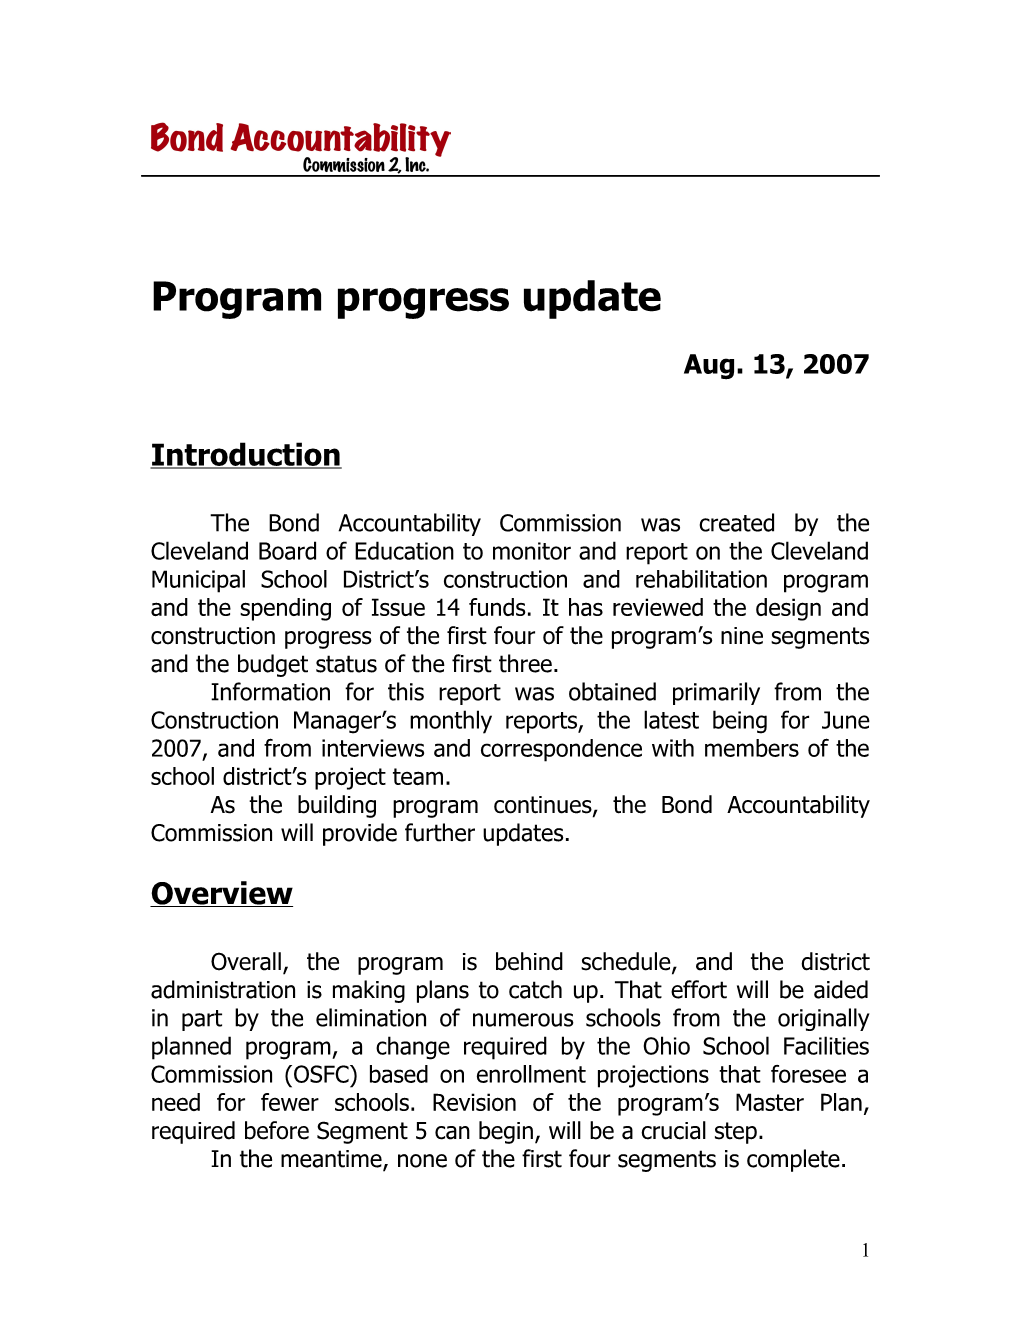 Program Progress Update